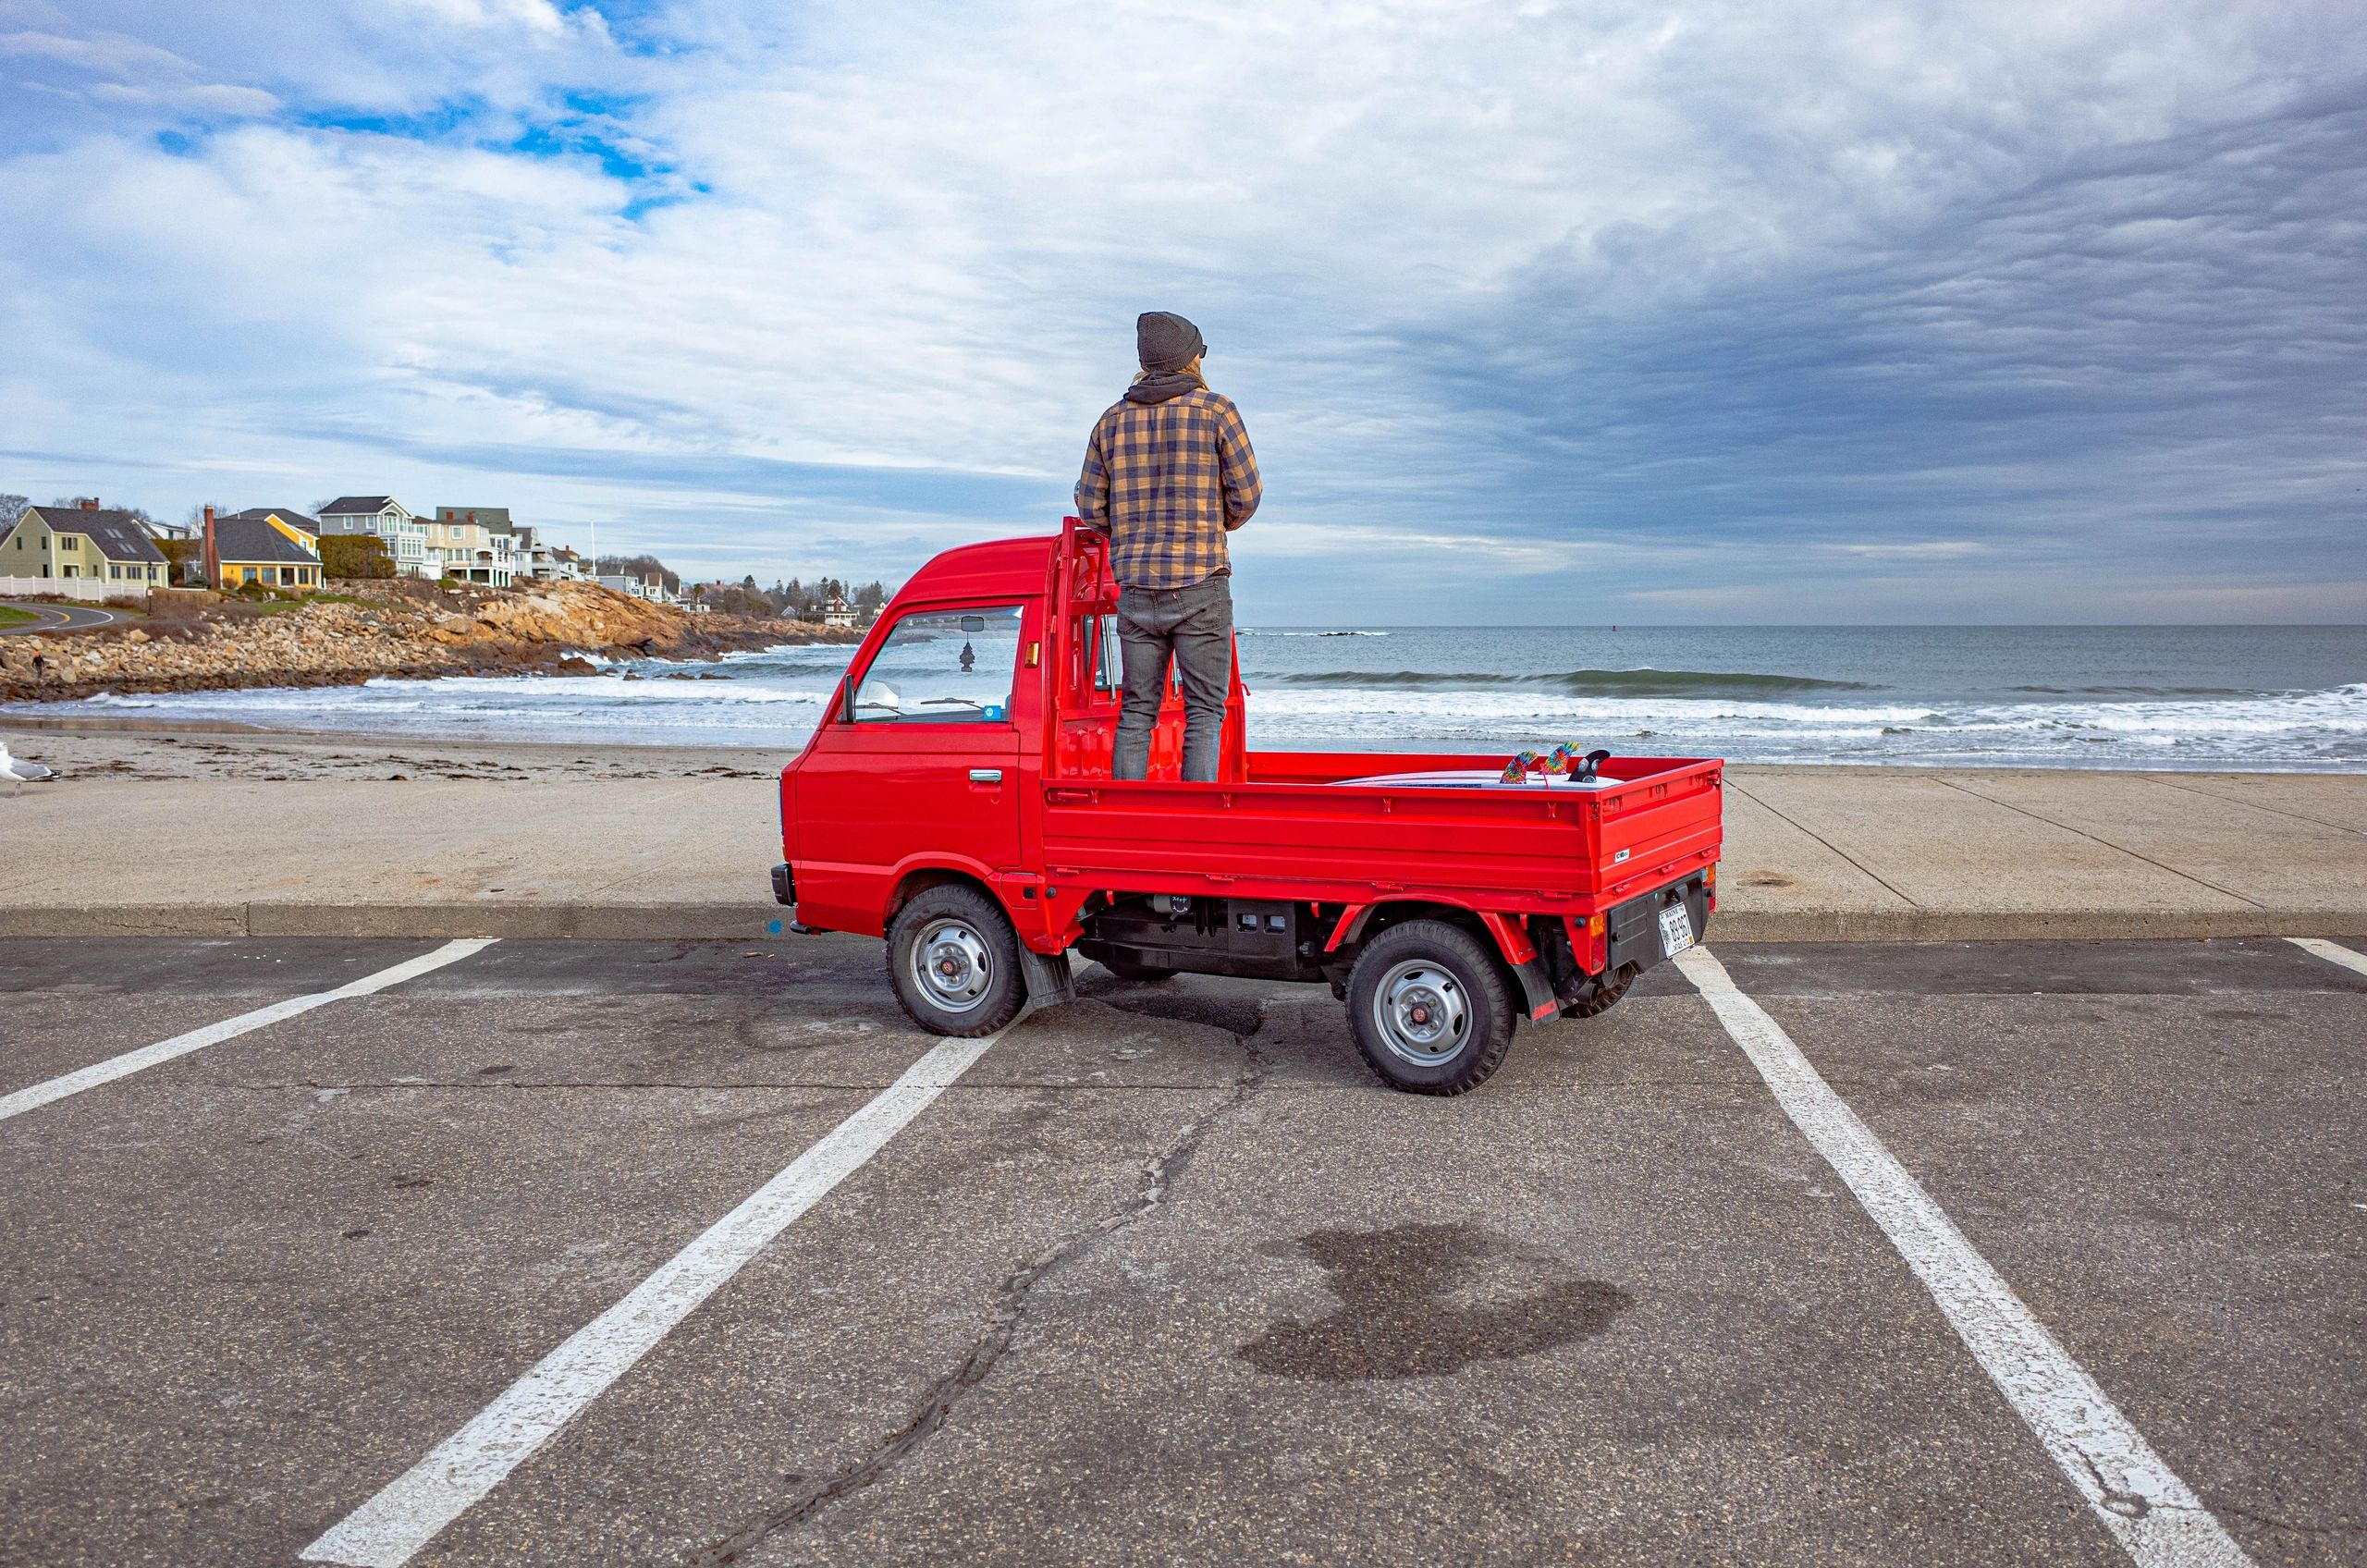 Red Subaru Sambar Kei truck on a Maine beach, headlining OIWA blog for mini truck enthusiasts.